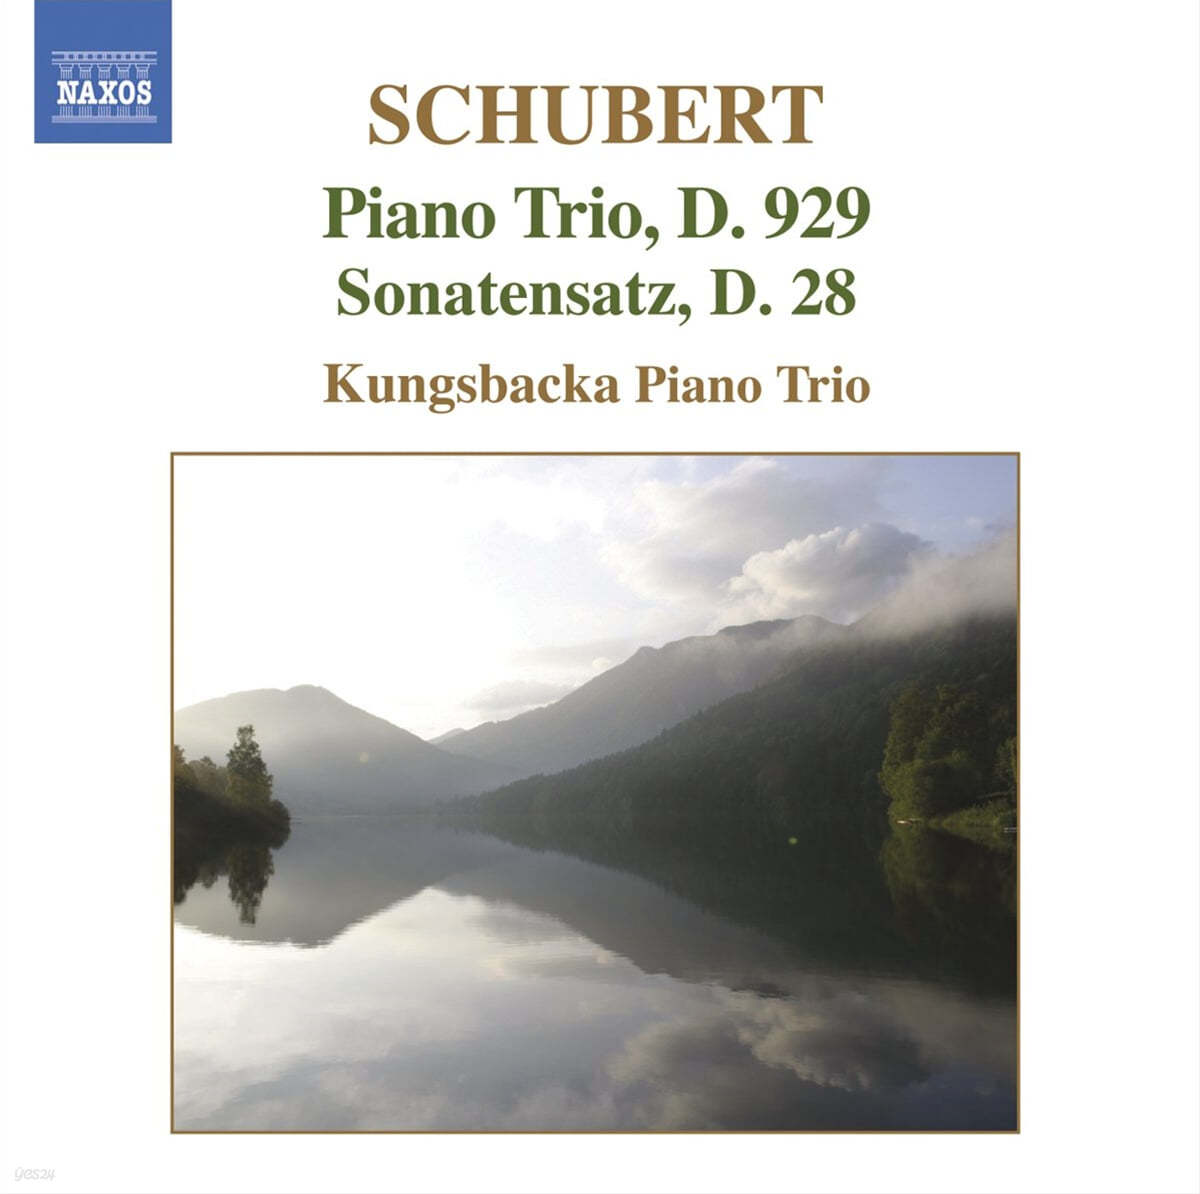 Kungsbacka Piano Trio 슈베르트: 피아노 삼중주 (Schubert: Piano Trio, D.929, Sonatensatz, D.28) 